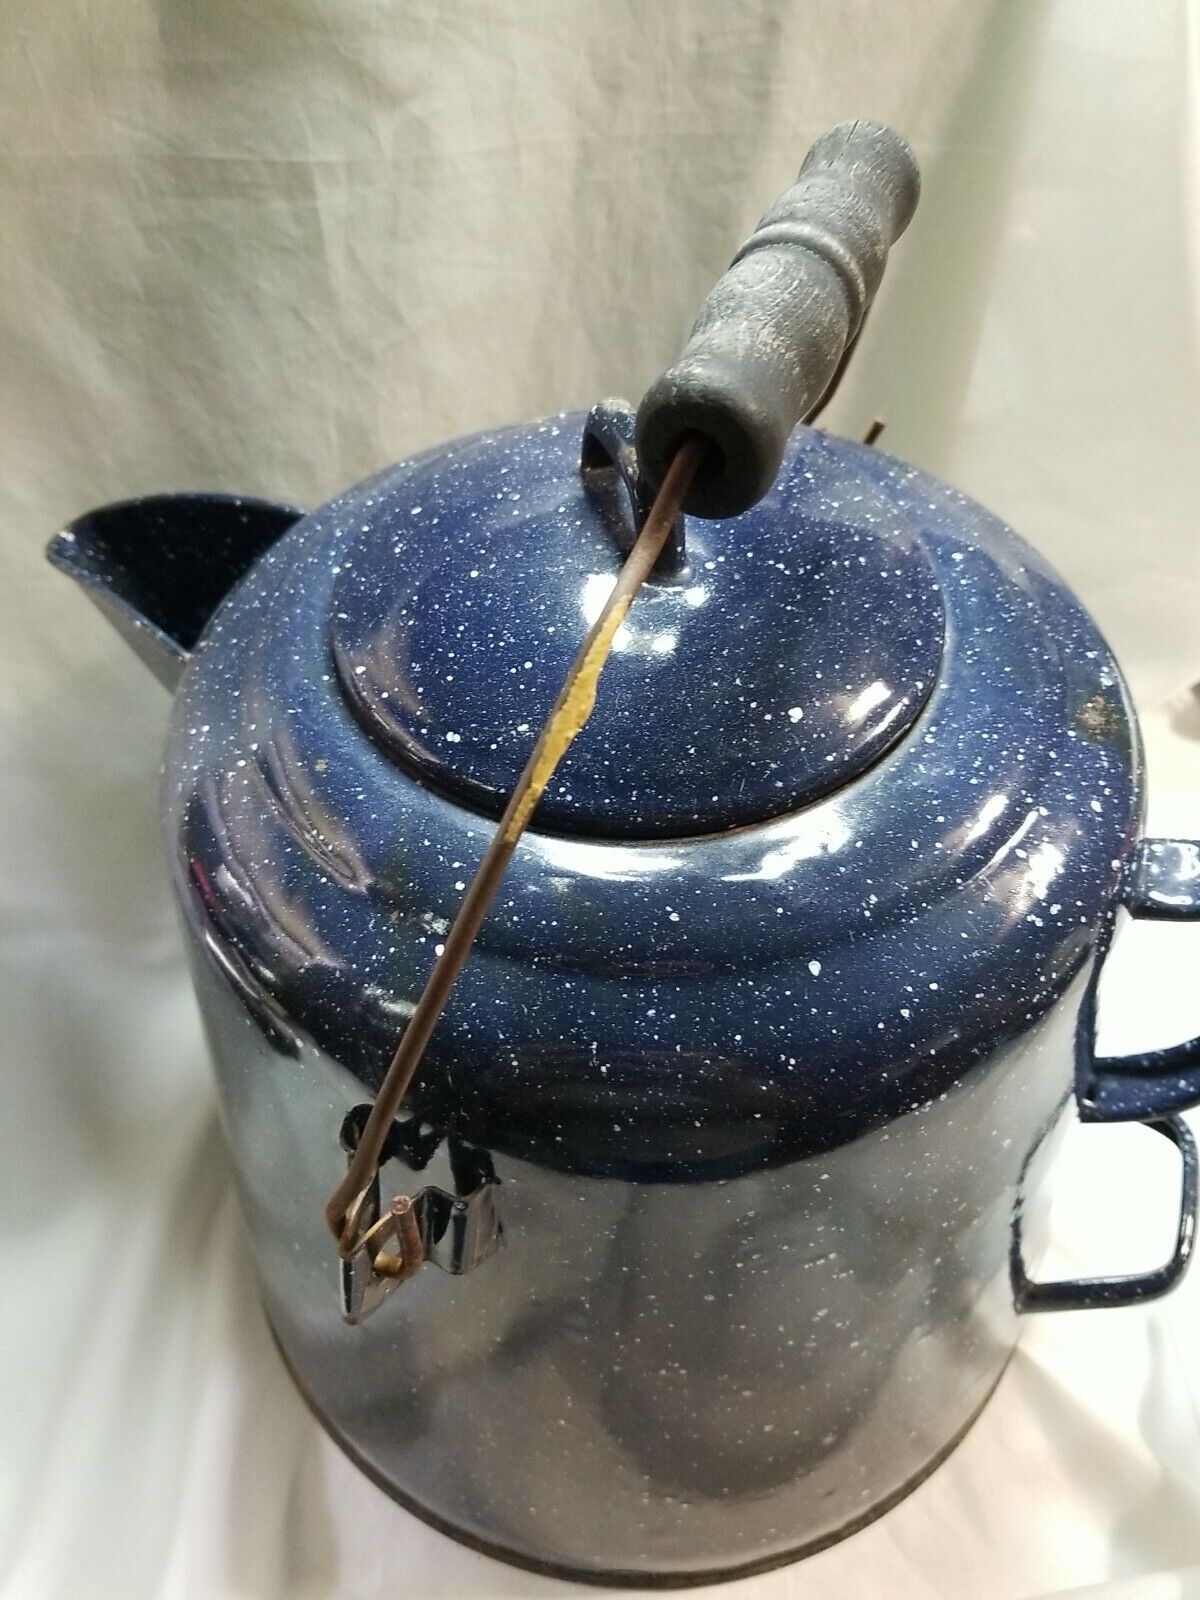 Vintage Extra Large Enamelware Splatterware Blue White Coffee Pot Kettle Water Tanie super mile widziane